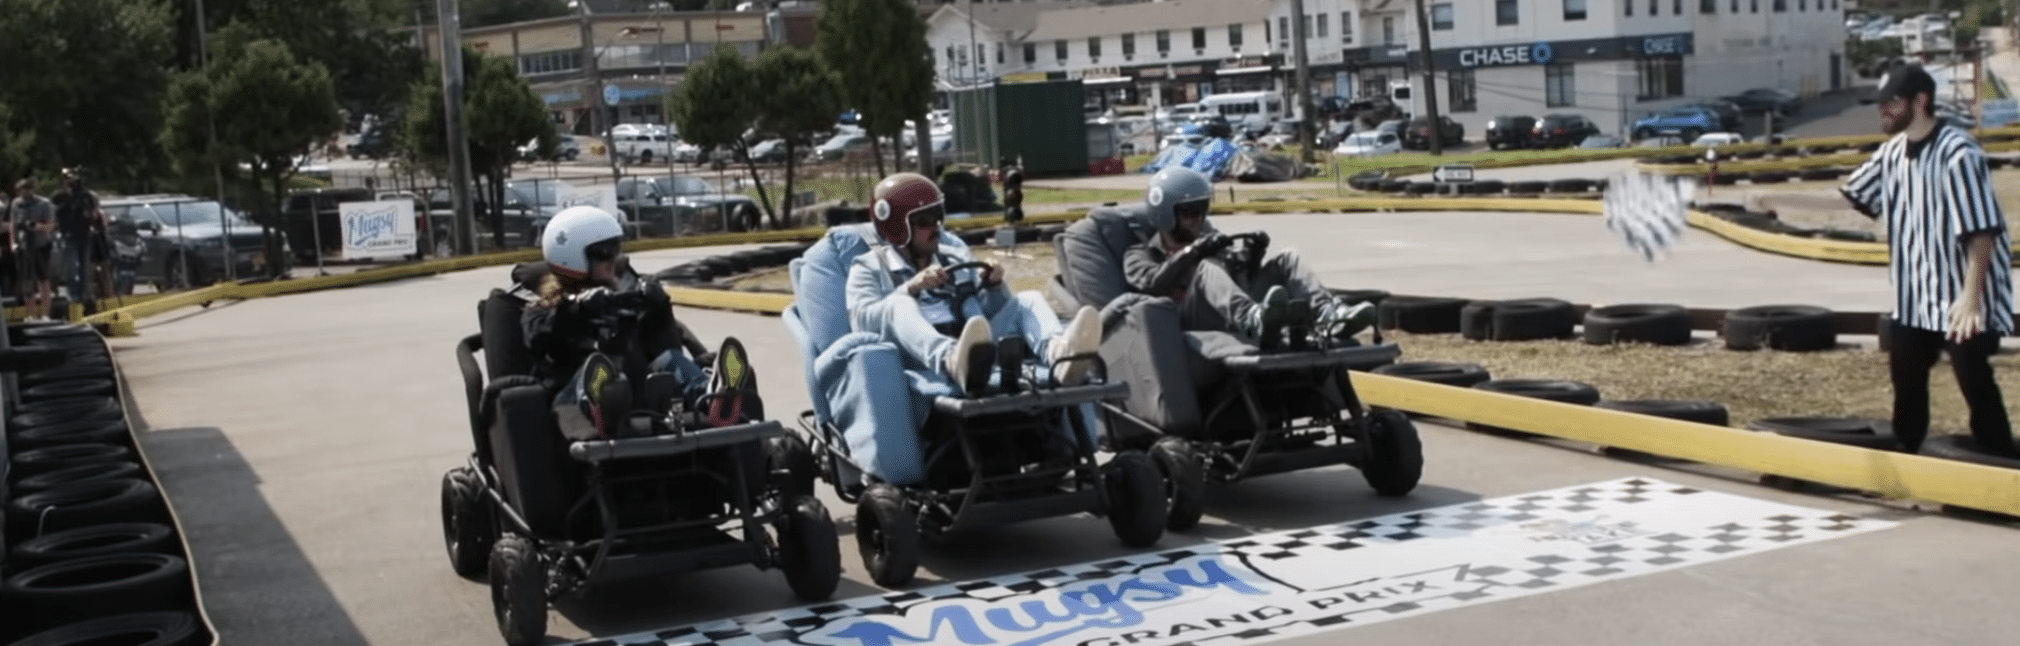 Mugsy Jeans Lazy Boy Go-Karts at a track ready to race